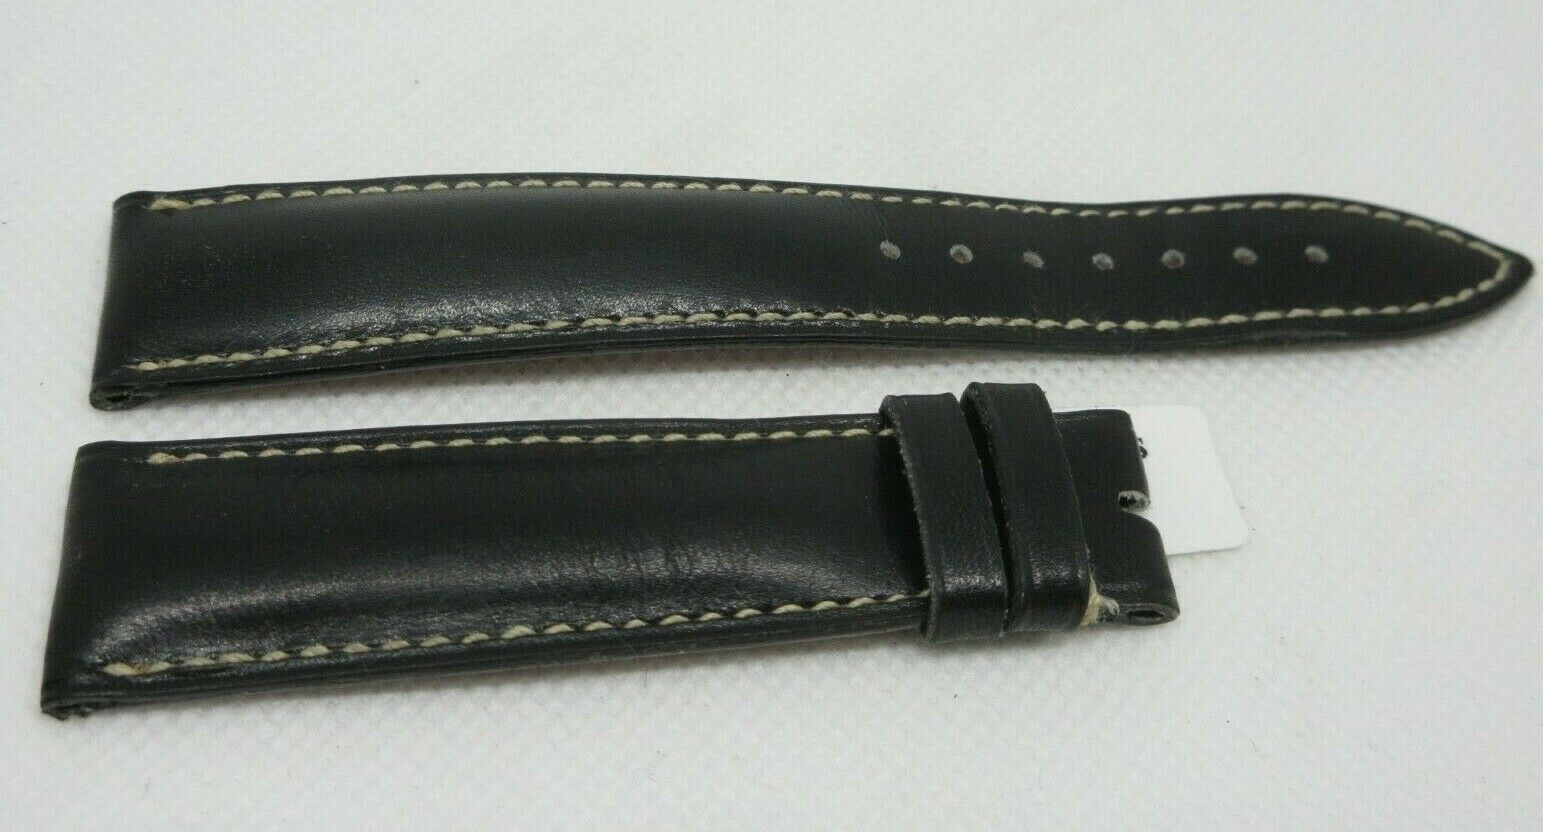 New Ulysse Nardin Black Leather Strap 19mm OEM Genuine